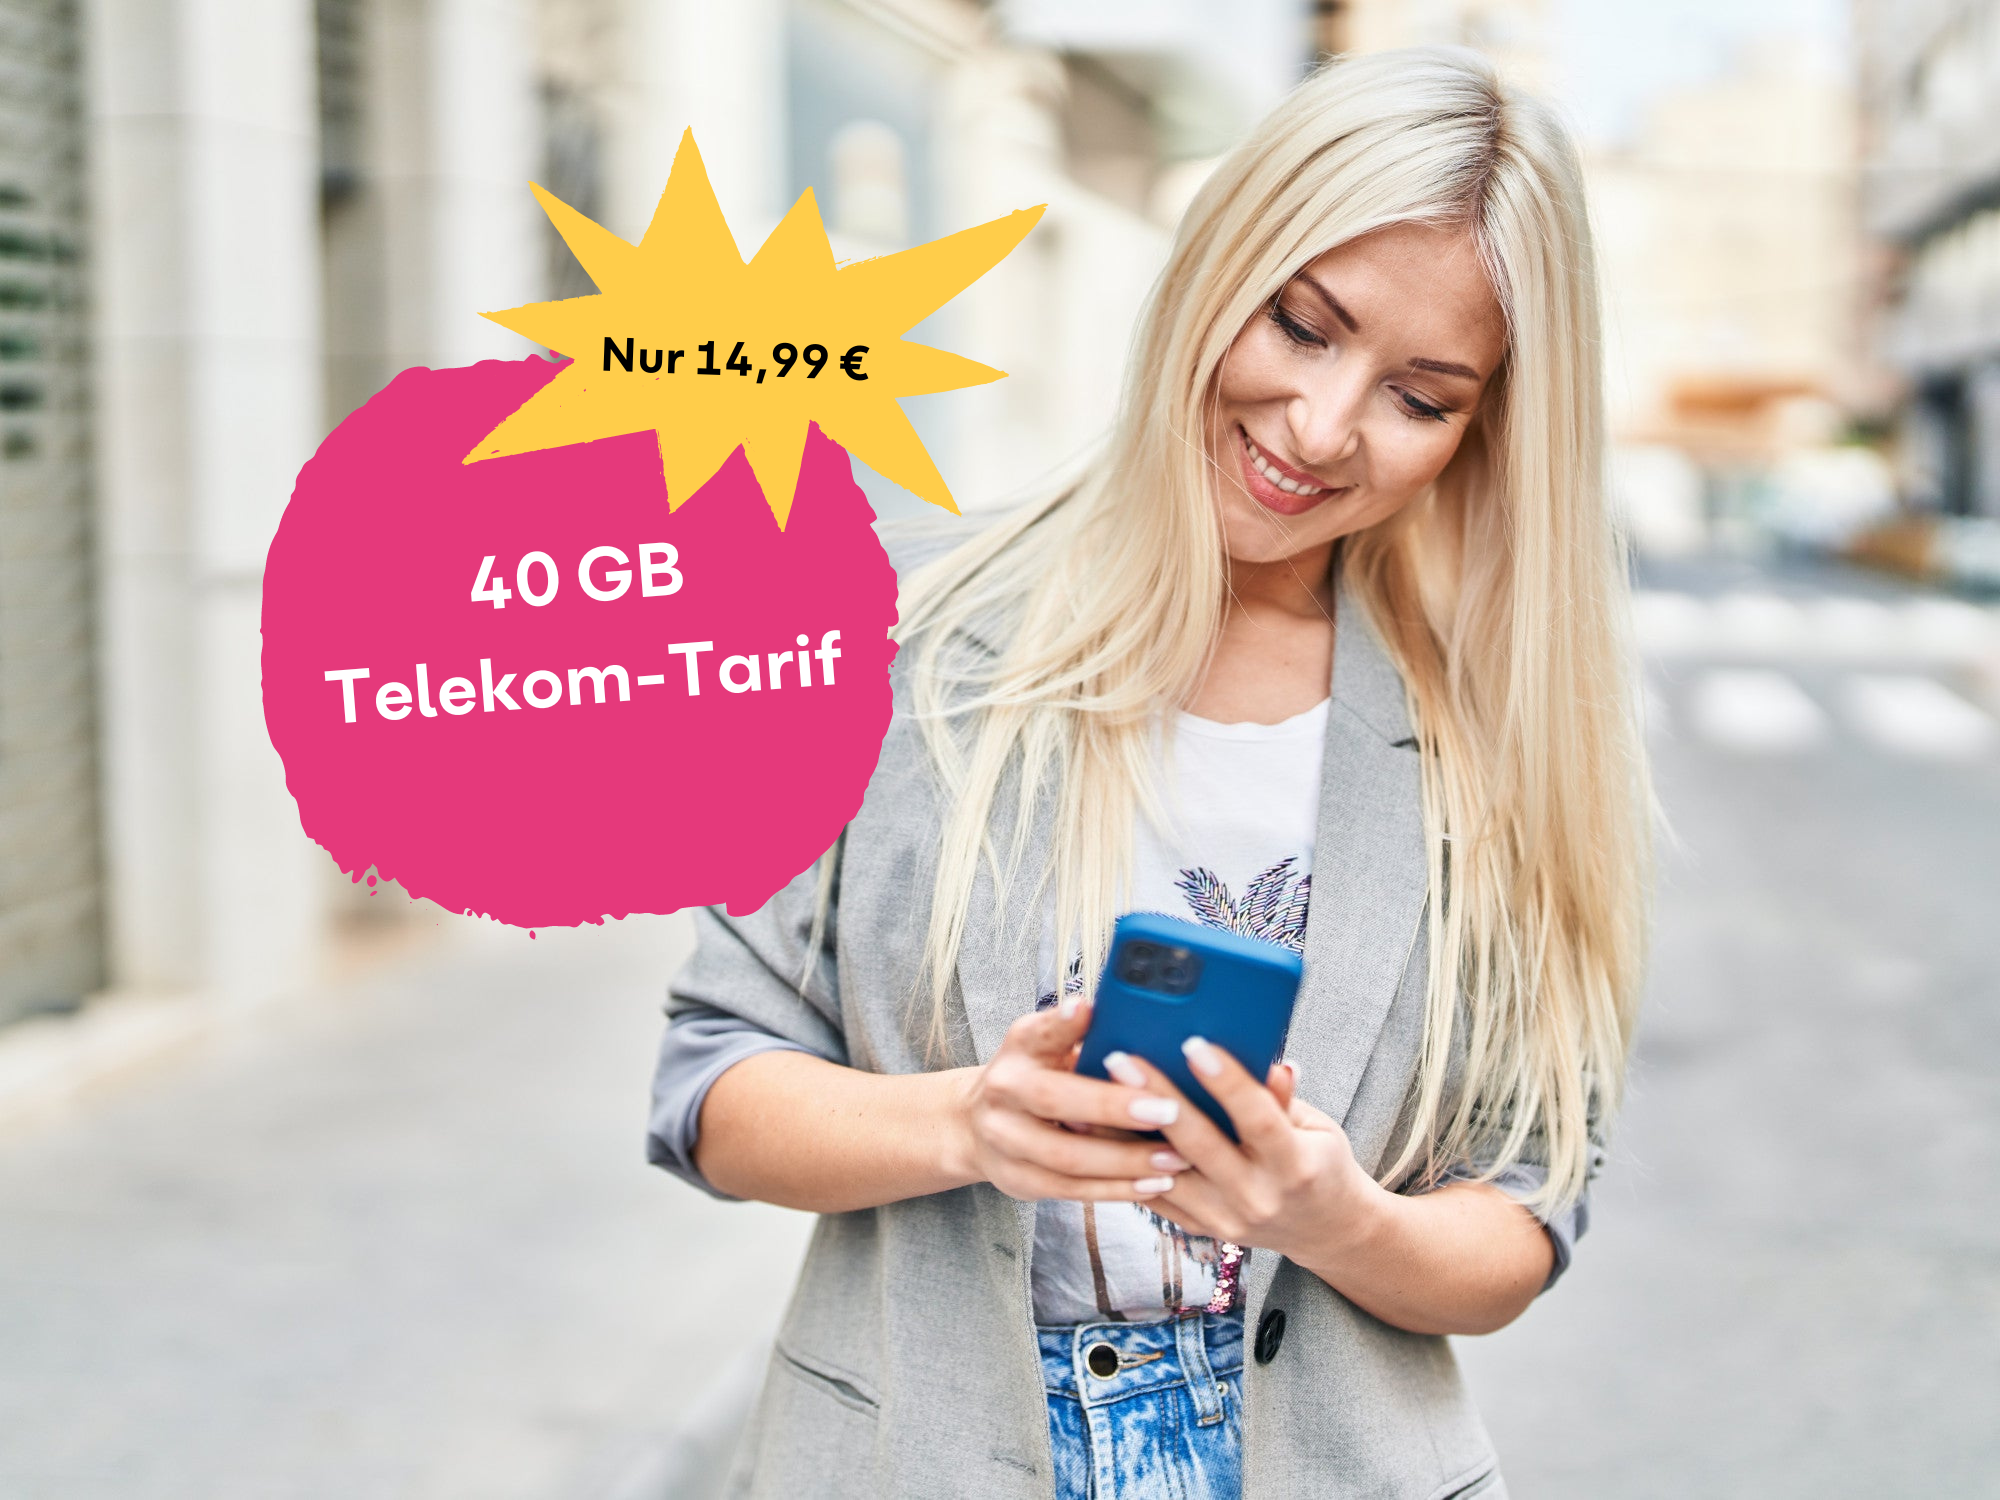 40 GB Telekom-Tarif für nur 14,99 Euro